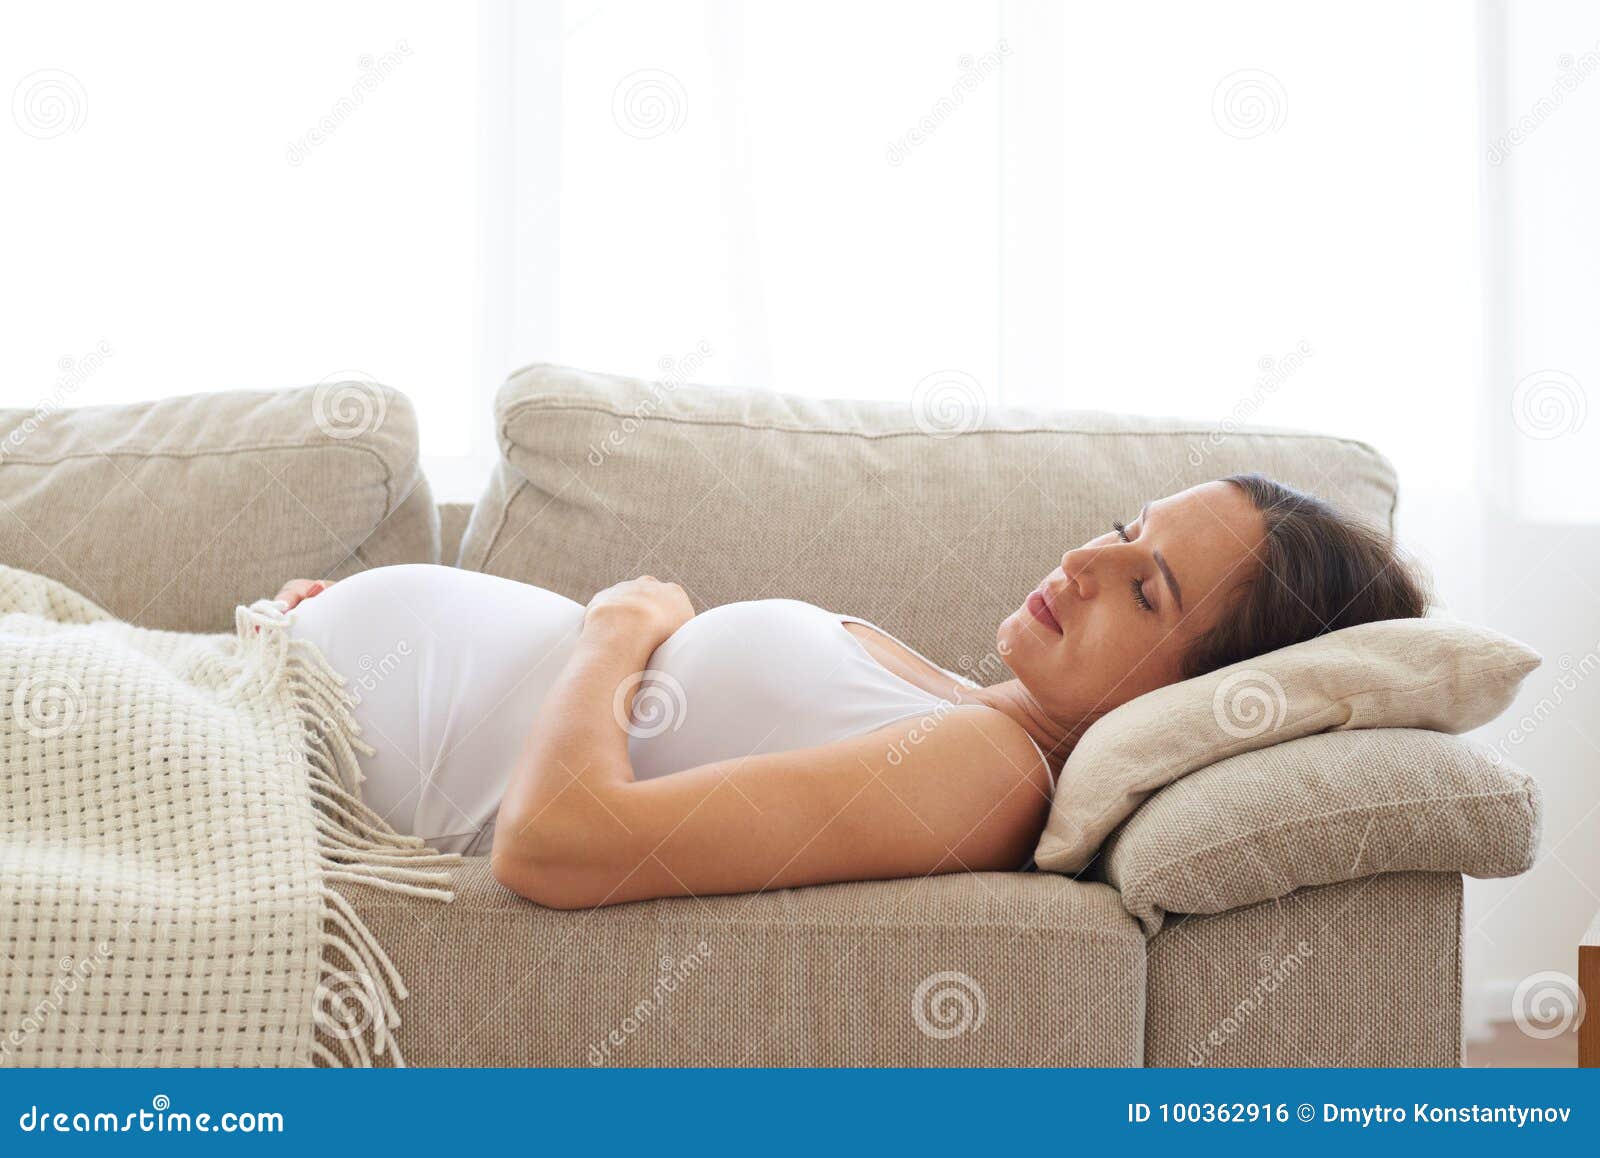 чем опасен оргазм при беременности во сне фото 112